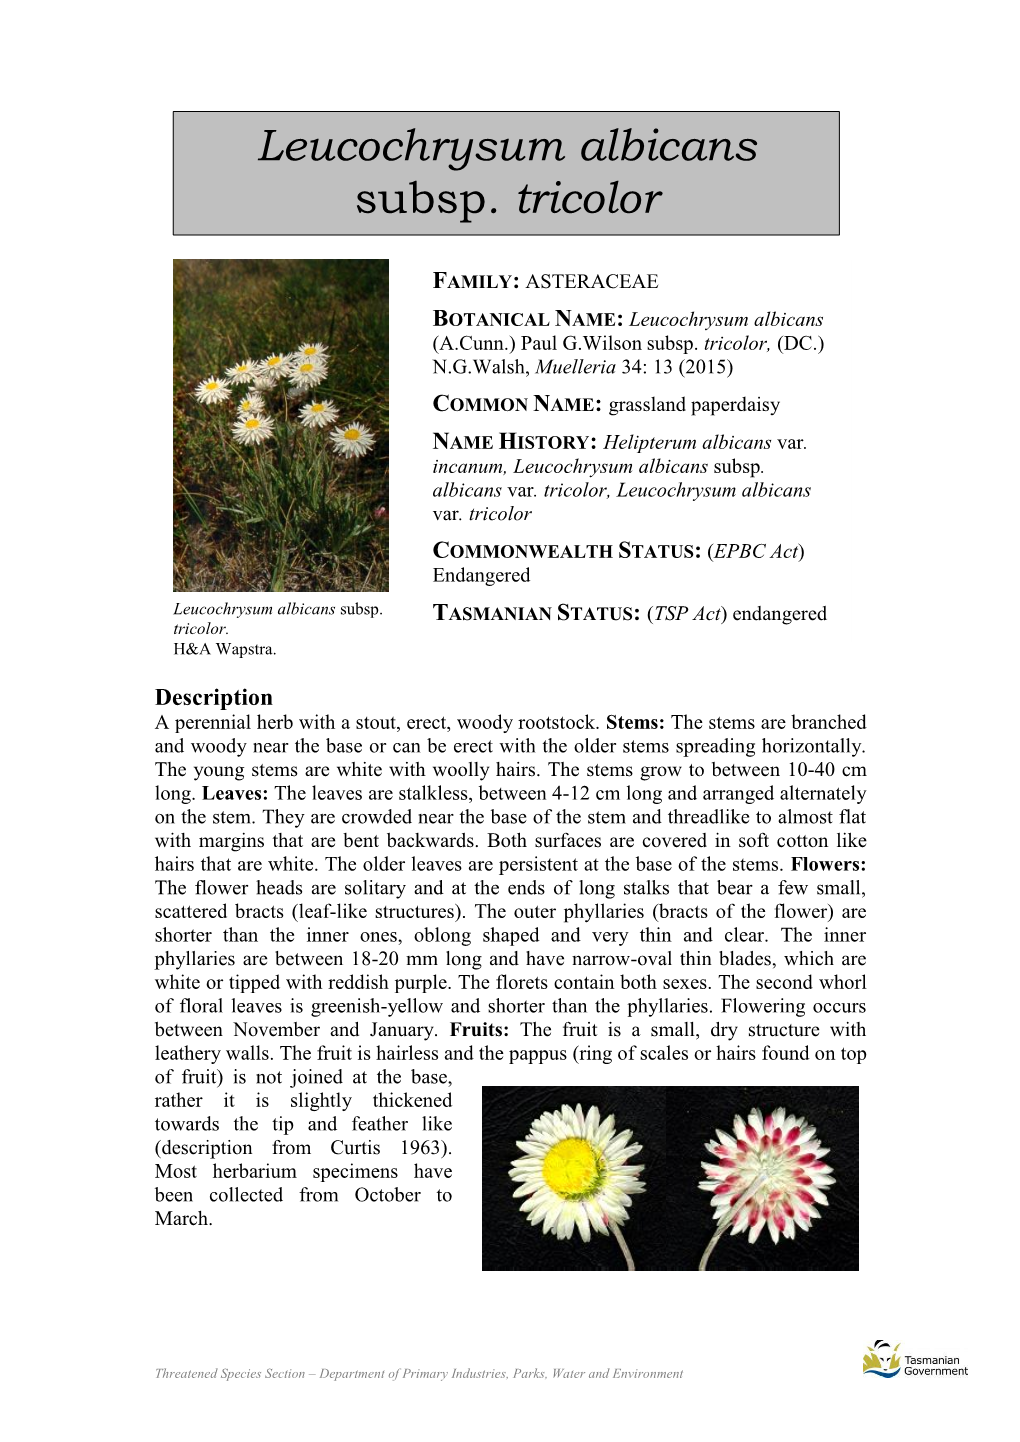 Leucochrysum Albicans Subsp. Tricolor